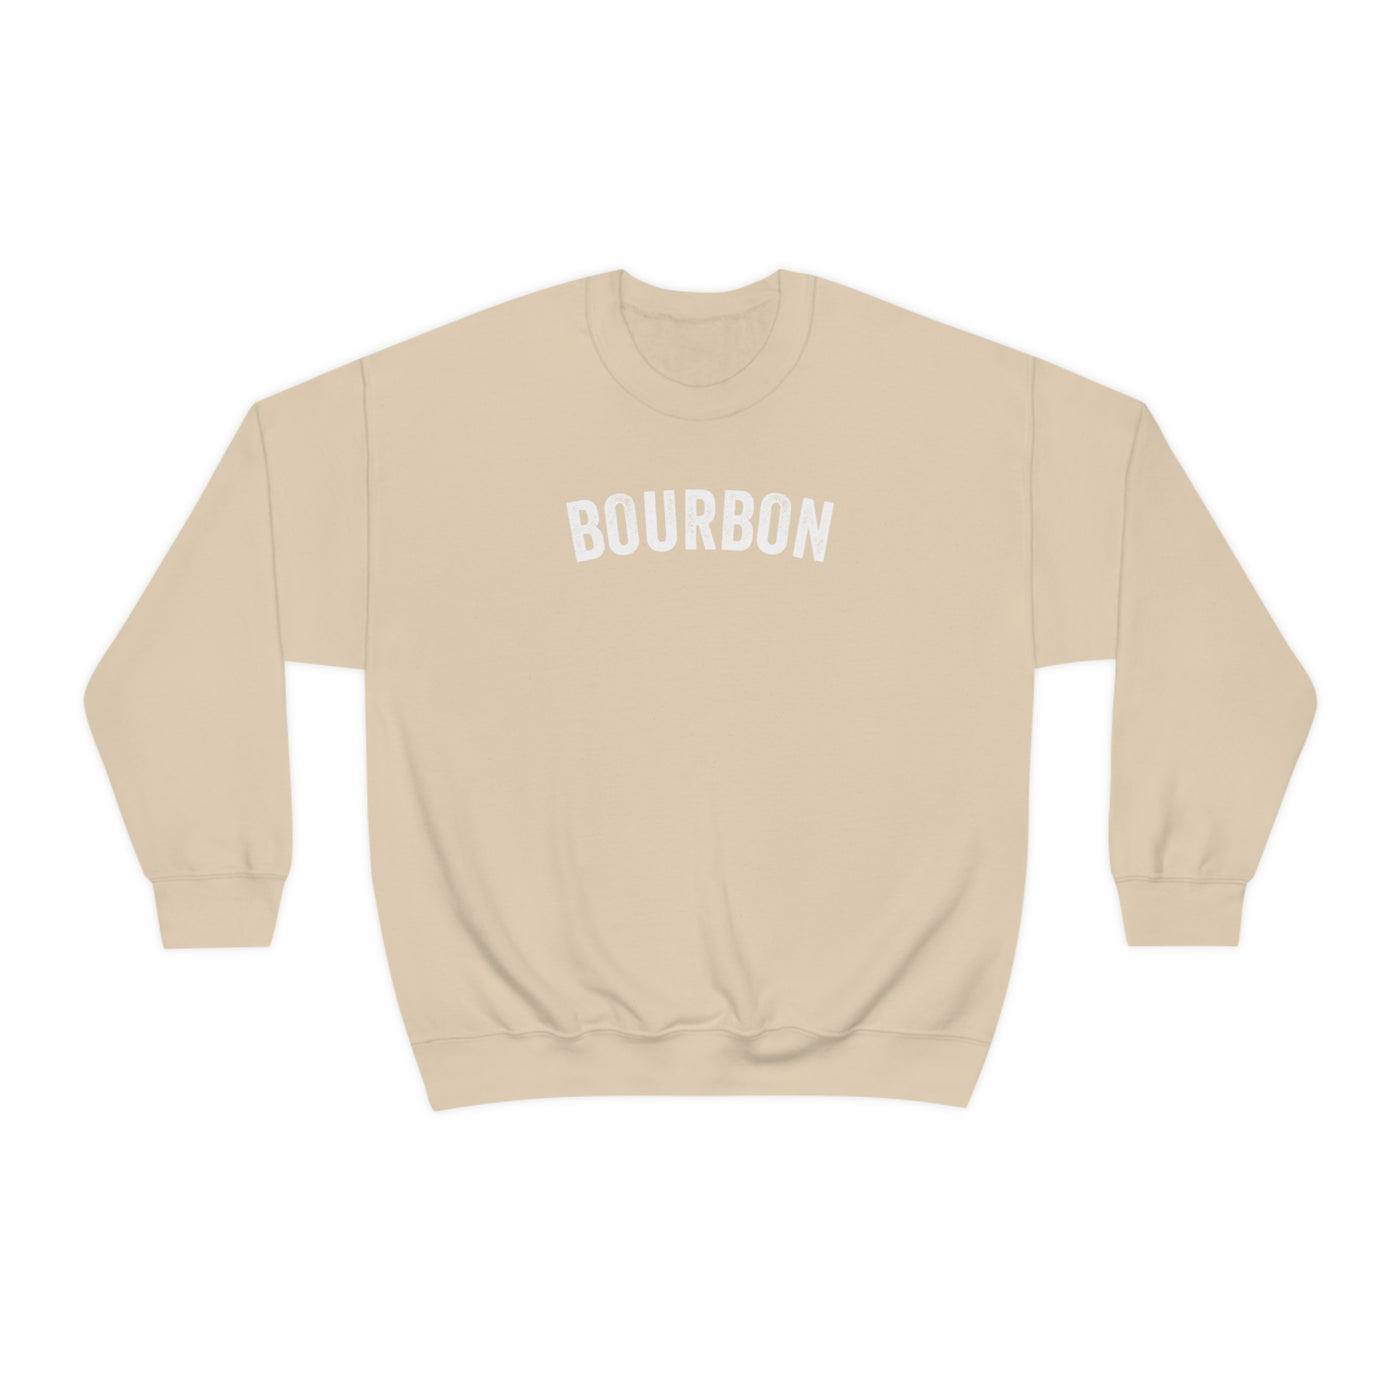 Bourbon Crewneck Sweatshirt